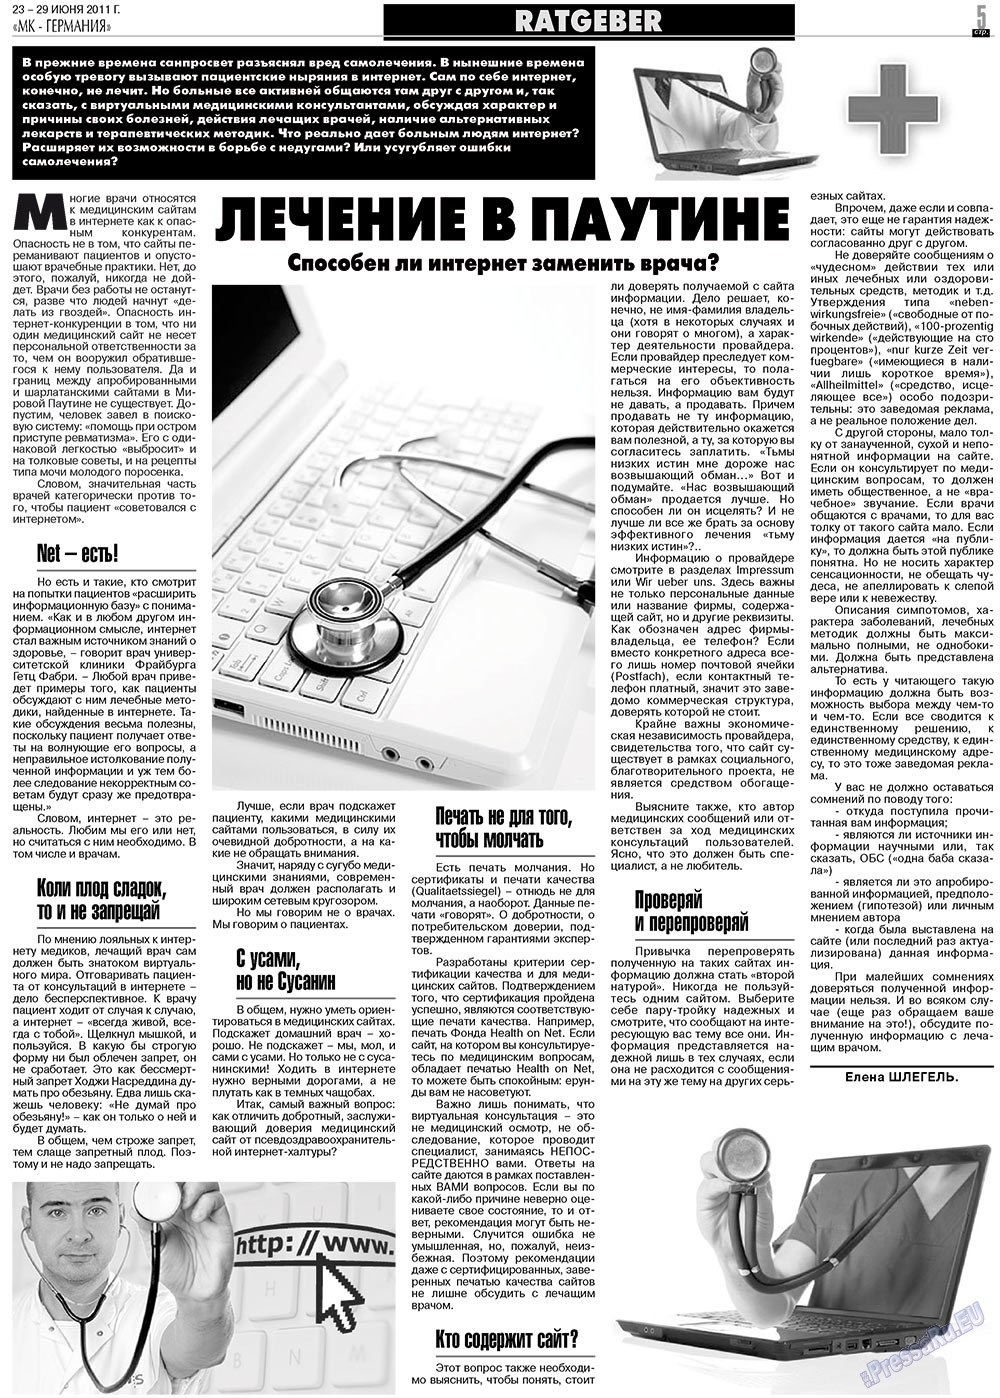 МК-Германия, газета. 2011 №25 стр.5